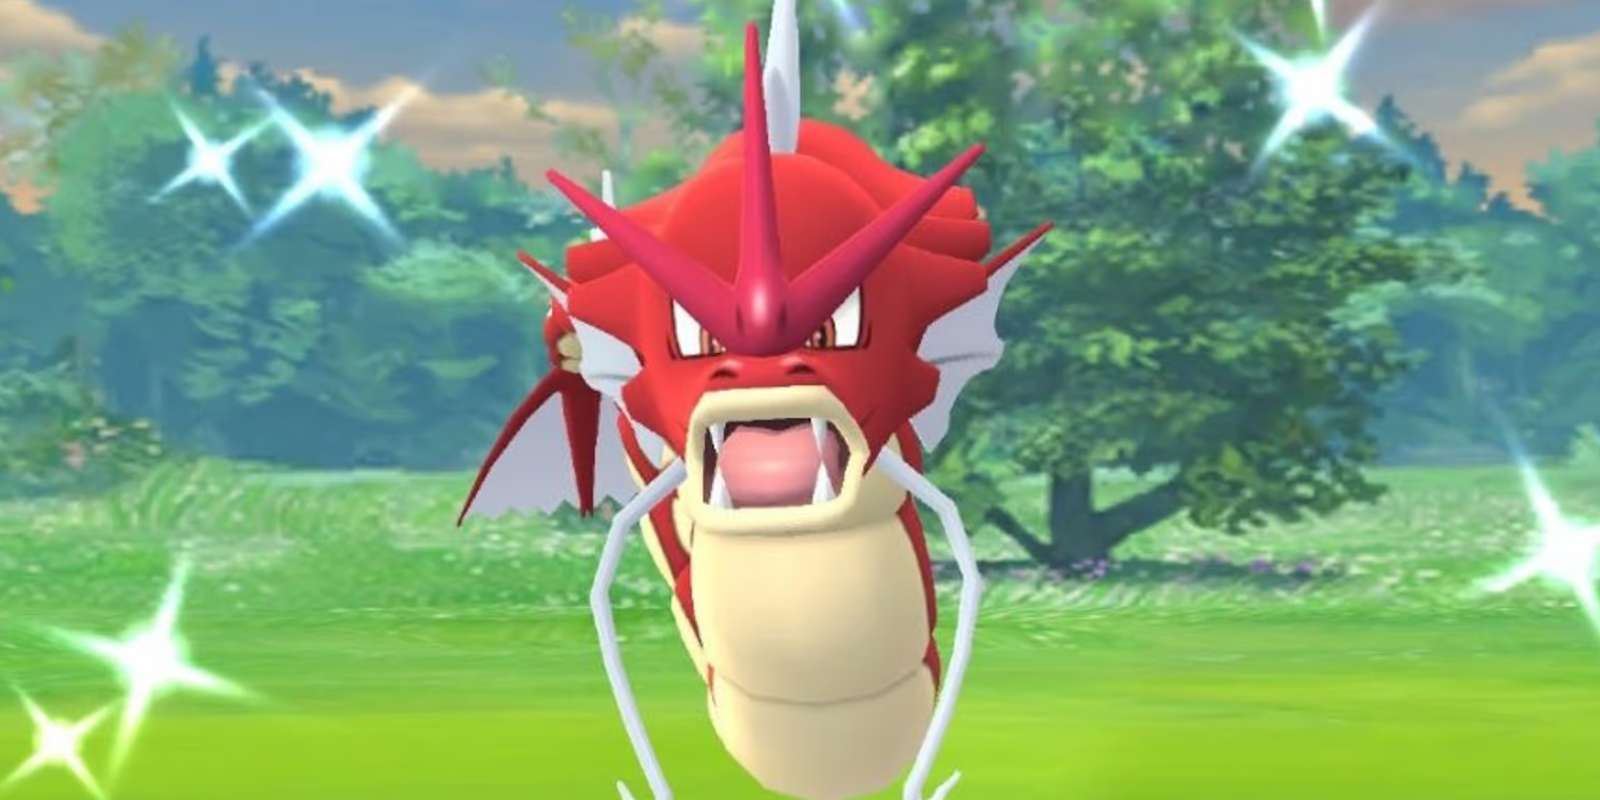 Shiny Gyarados as seen in Pokemon GO.